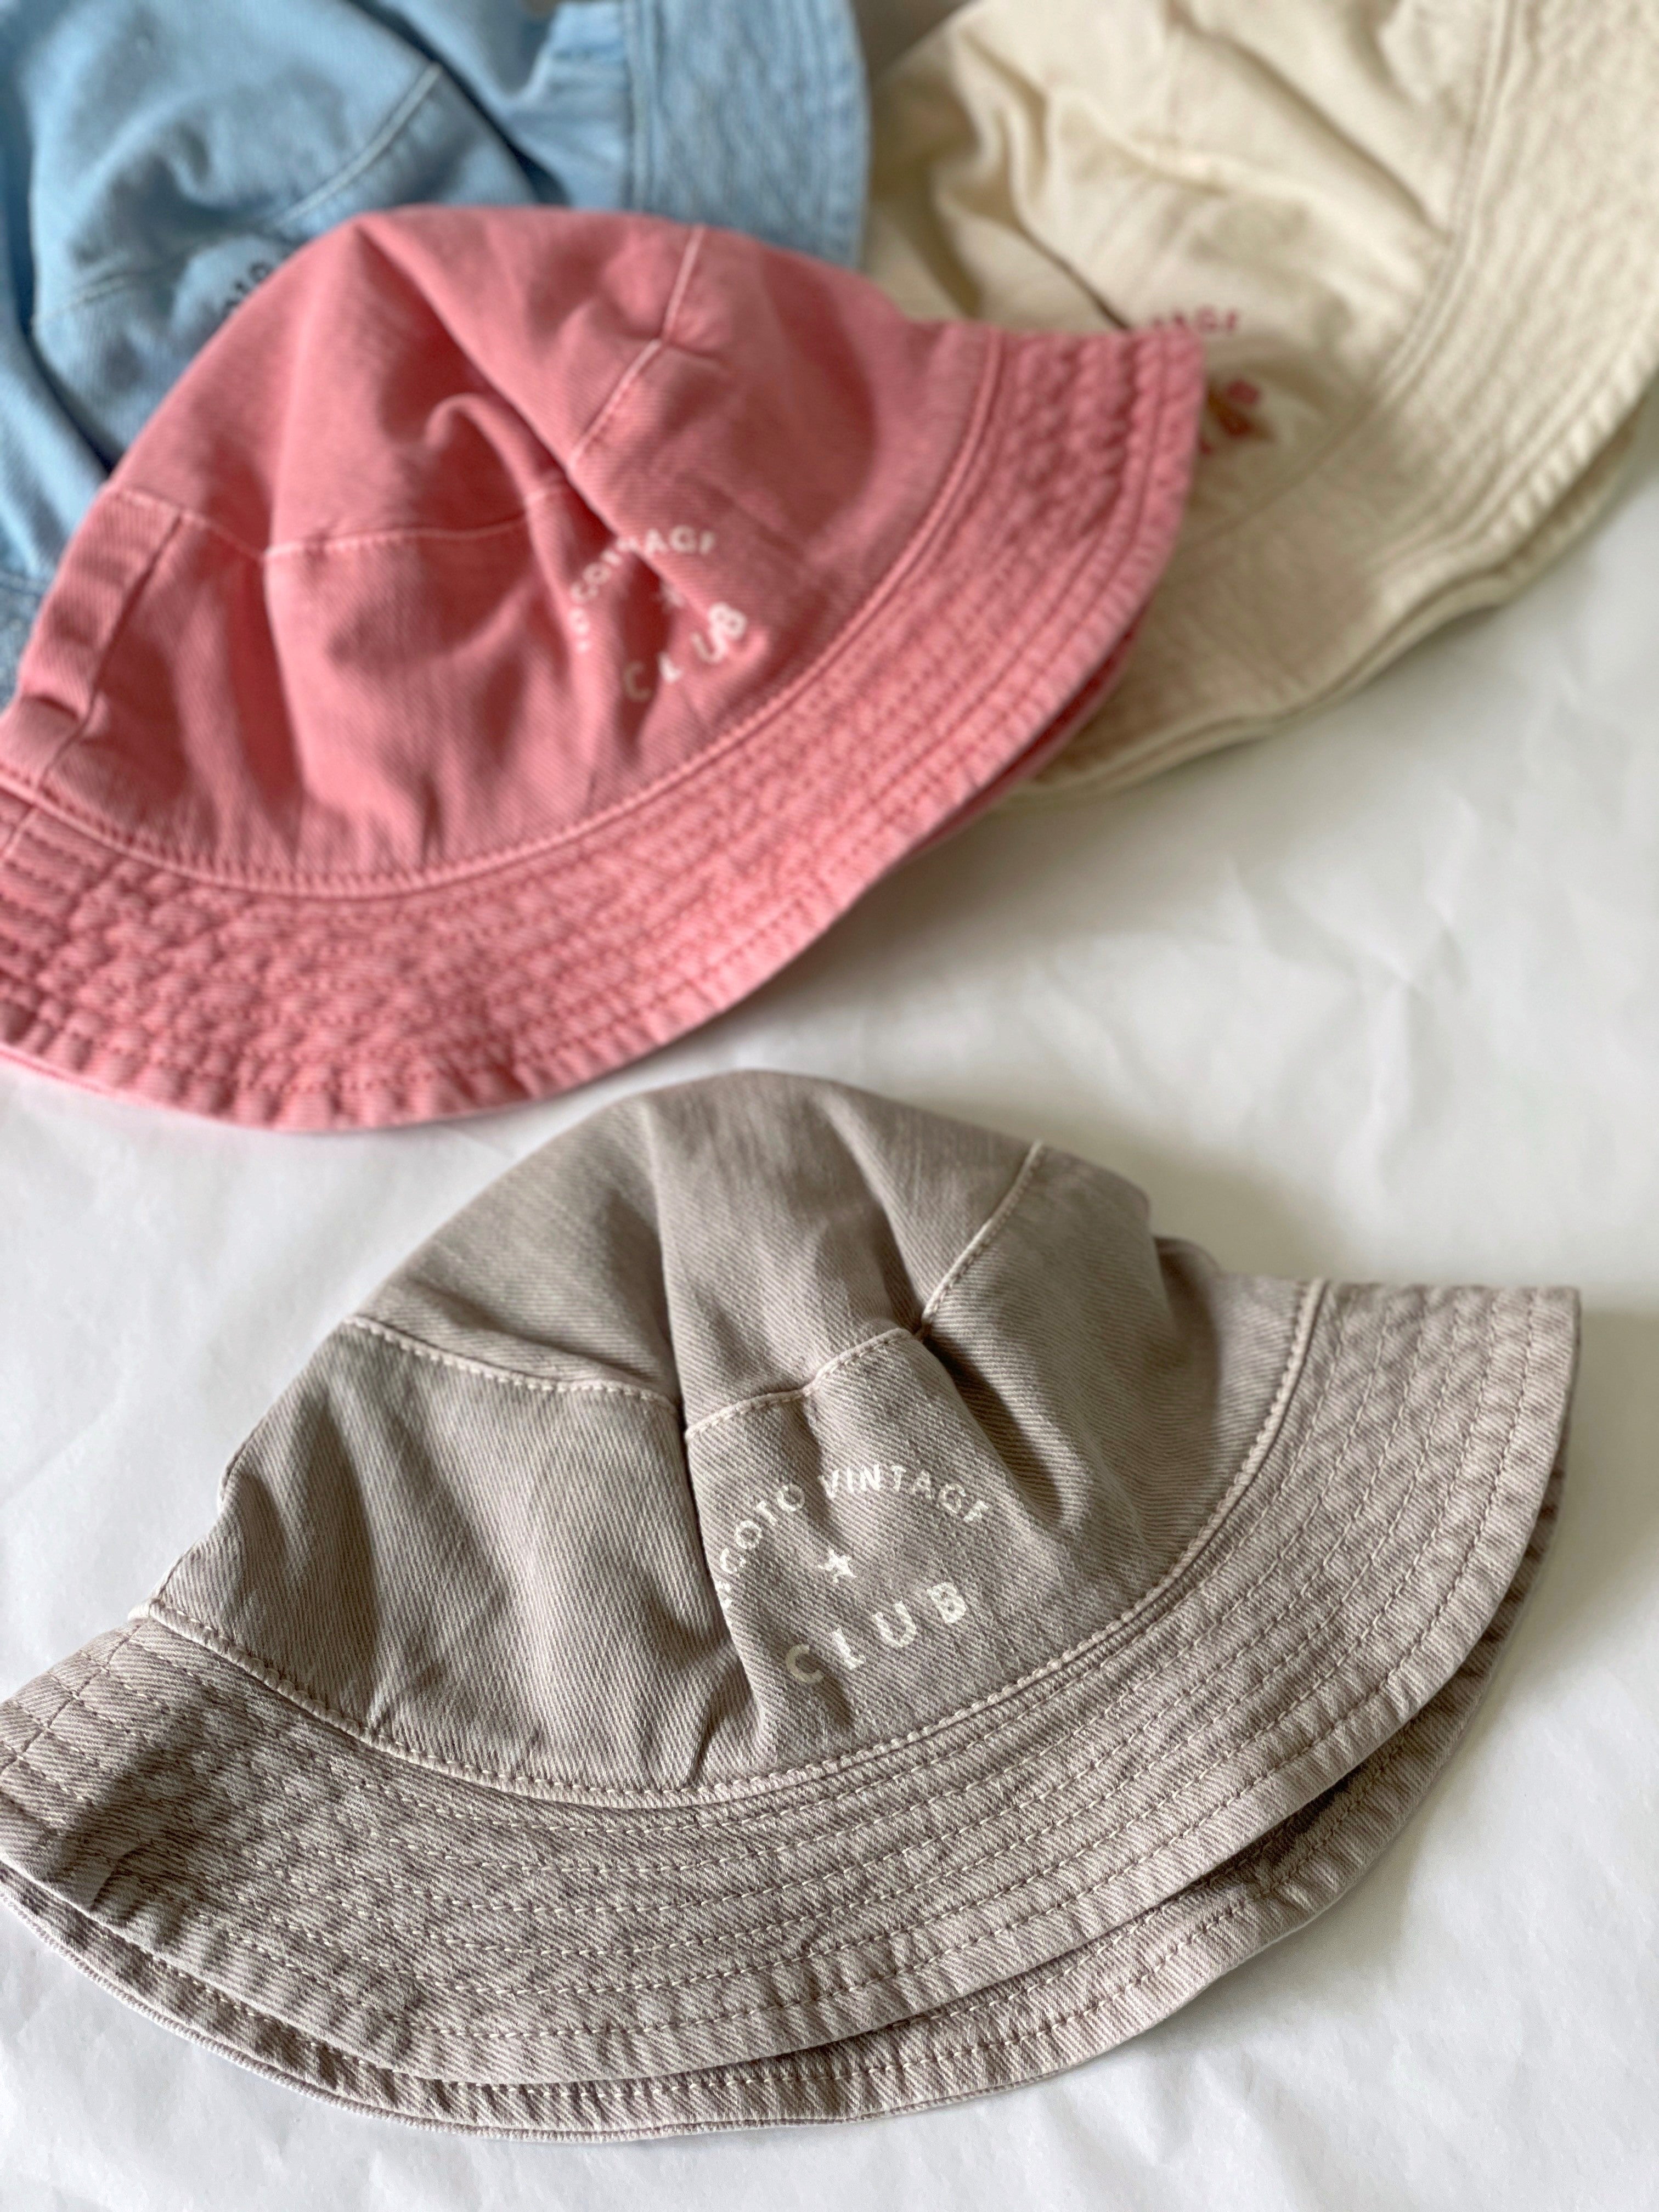 Denim Hat "TOCOTO VINTAGE CLUB" - Pink